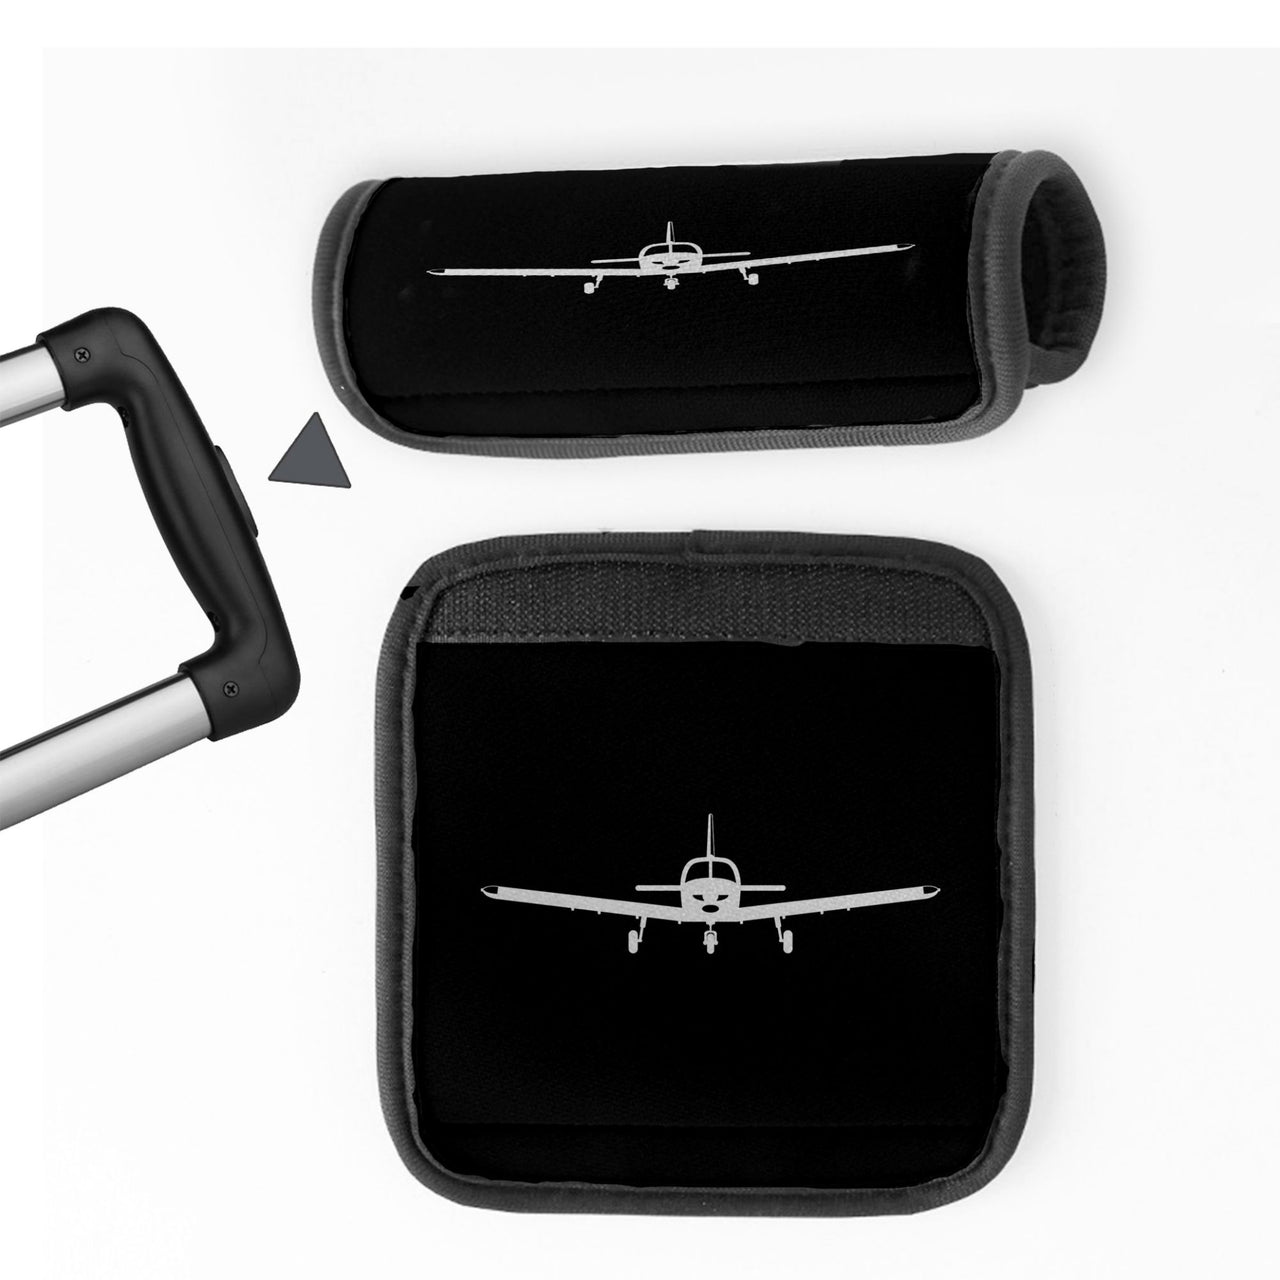 Piper PA28 Silhouette Plane Designed Neoprene Luggage Handle Covers